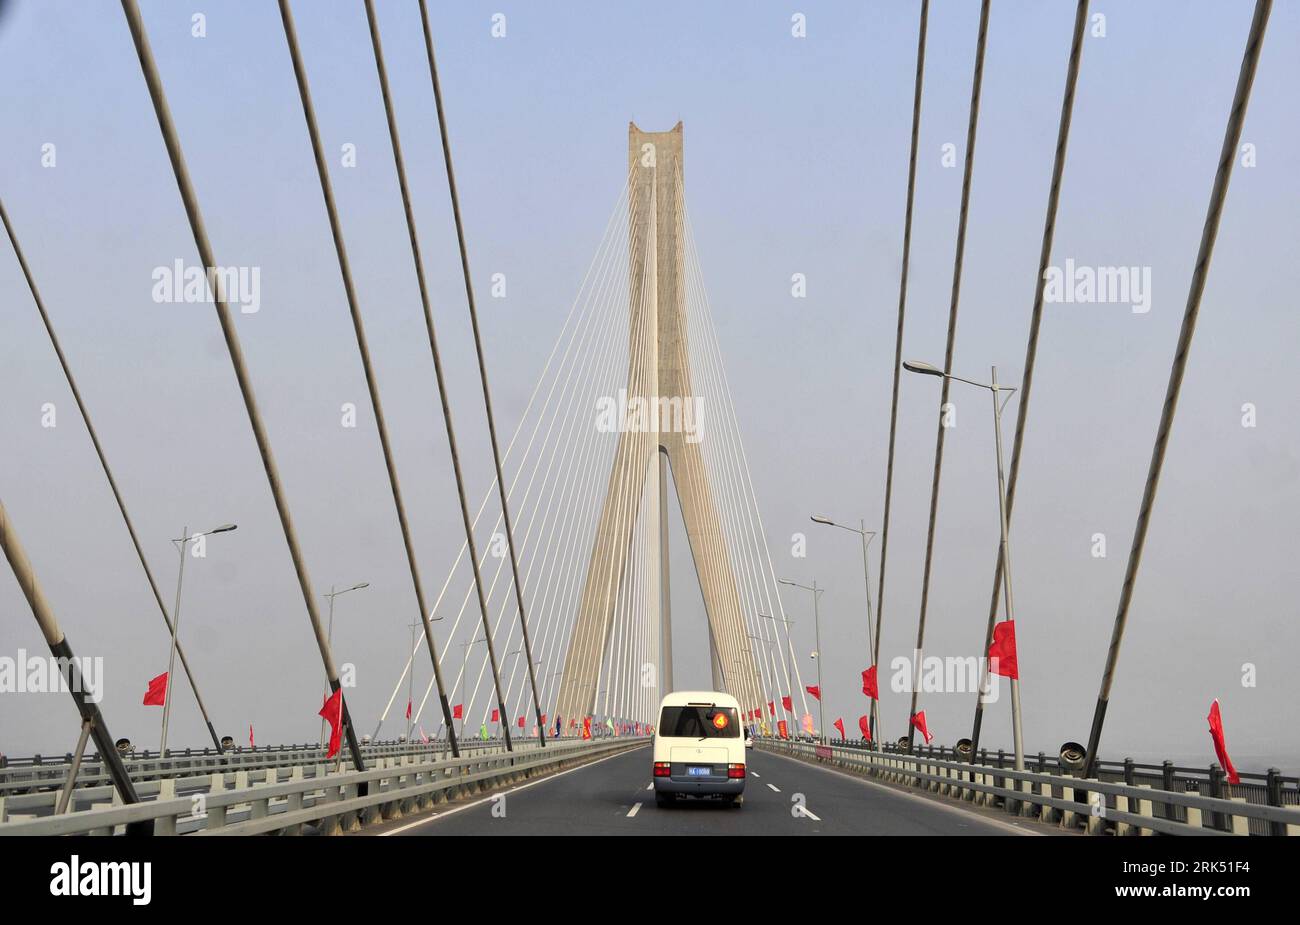 Bildnummer: 53686906  Datum: 26.12.2009  Copyright: imago/Xinhua (091226) -- WUHAN, Dec. 26, 2009 (Xinhua) -- Vehicles run on the Tianxingzhou highway-railway Bridge in Wuhan, capital of central China s Hubei Province, Dec. 26, 2009. Built at a cost of 11 billion yuan (1.6 billion U.S. dollars), the 4,657-meter cable suspension bridge opened to traffic on Saturday. (Xinhua/Hao Tongqian) (yy) (2)CHINA-WUHAN-HIGHWAY-RAILWAY BRIDGE-TIANXINGZHOU-DEBUT (CN) PUBLICATIONxNOTxINxCHN Bauwerke Brücken kbdig xsk 2009 quer     Bildnummer 53686906 Date 26 12 2009 Copyright Imago XINHUA  Wuhan DEC 26 2009 X Stock Photo